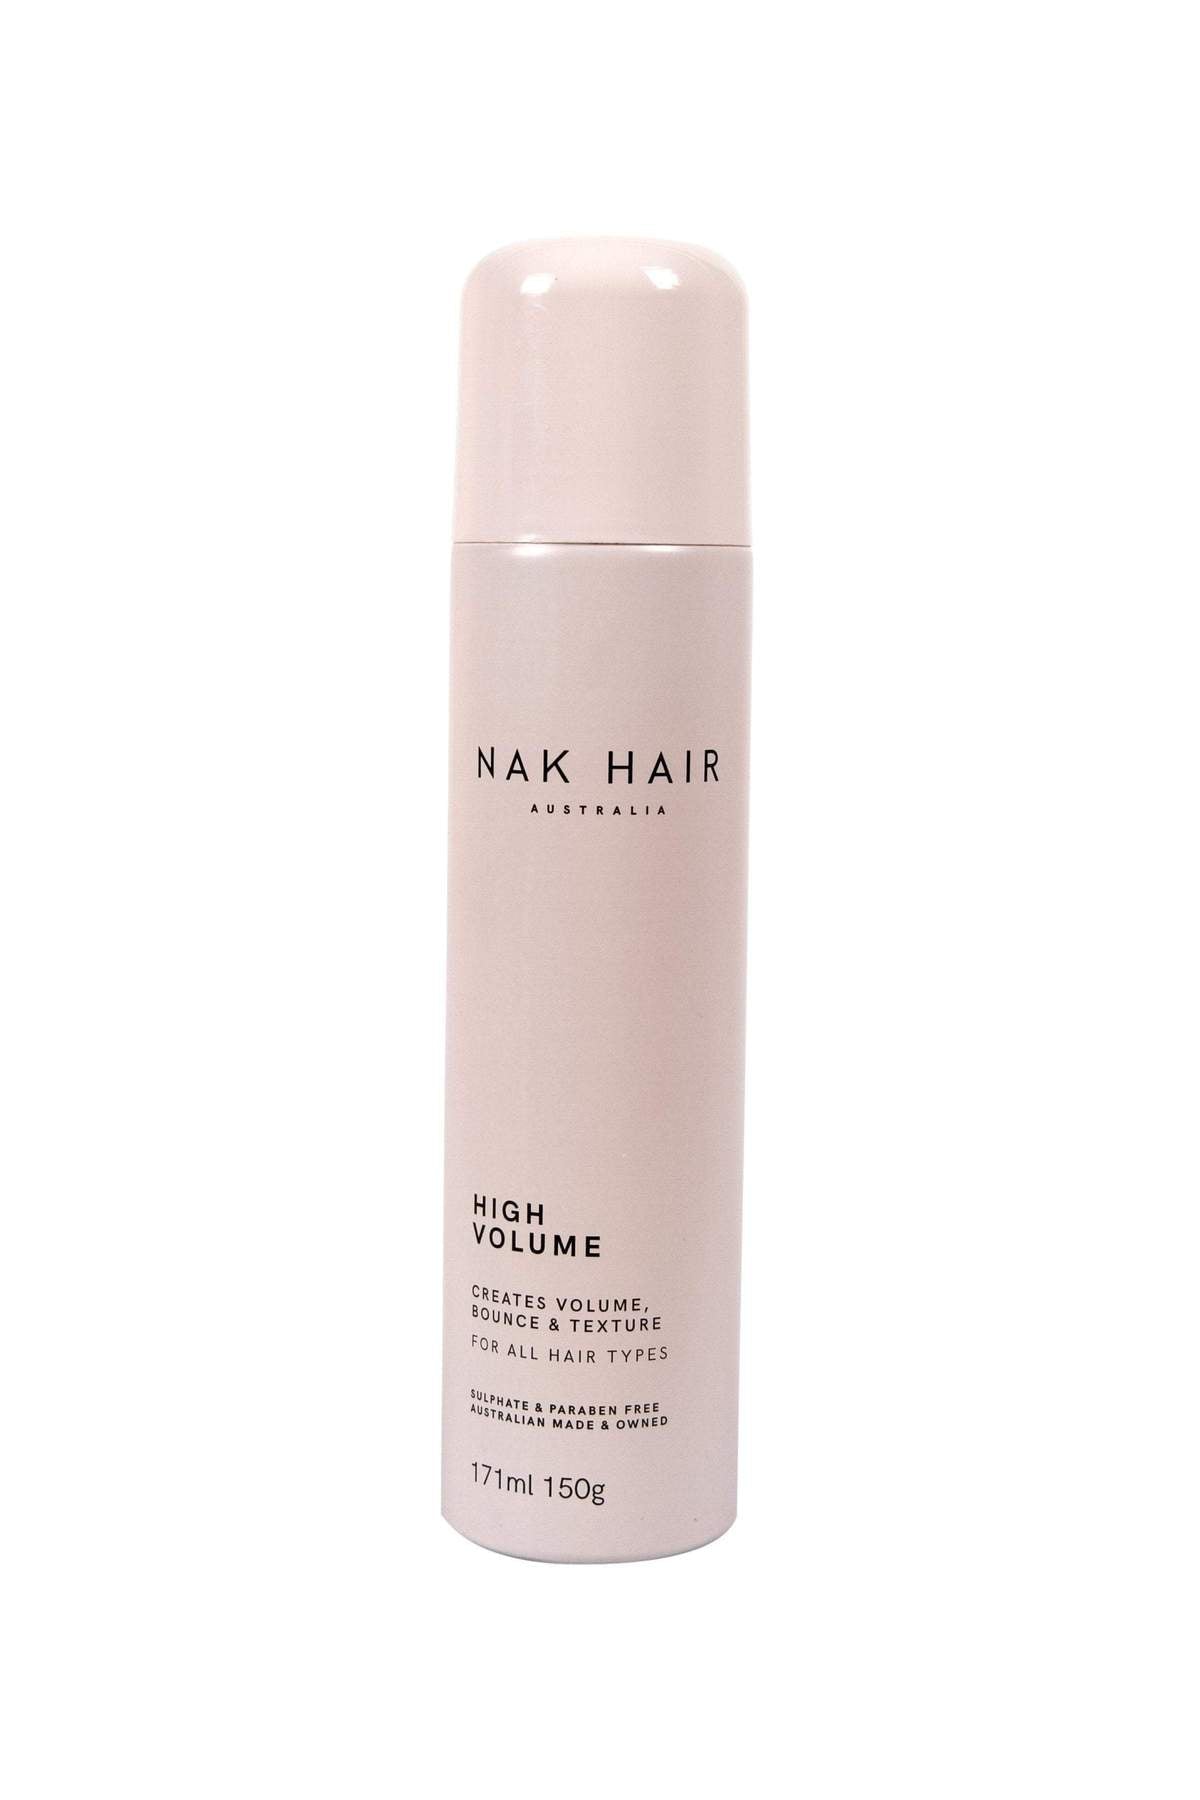 NAK High Volume 150g Hair - Nak Hair - Luxe Pacifique